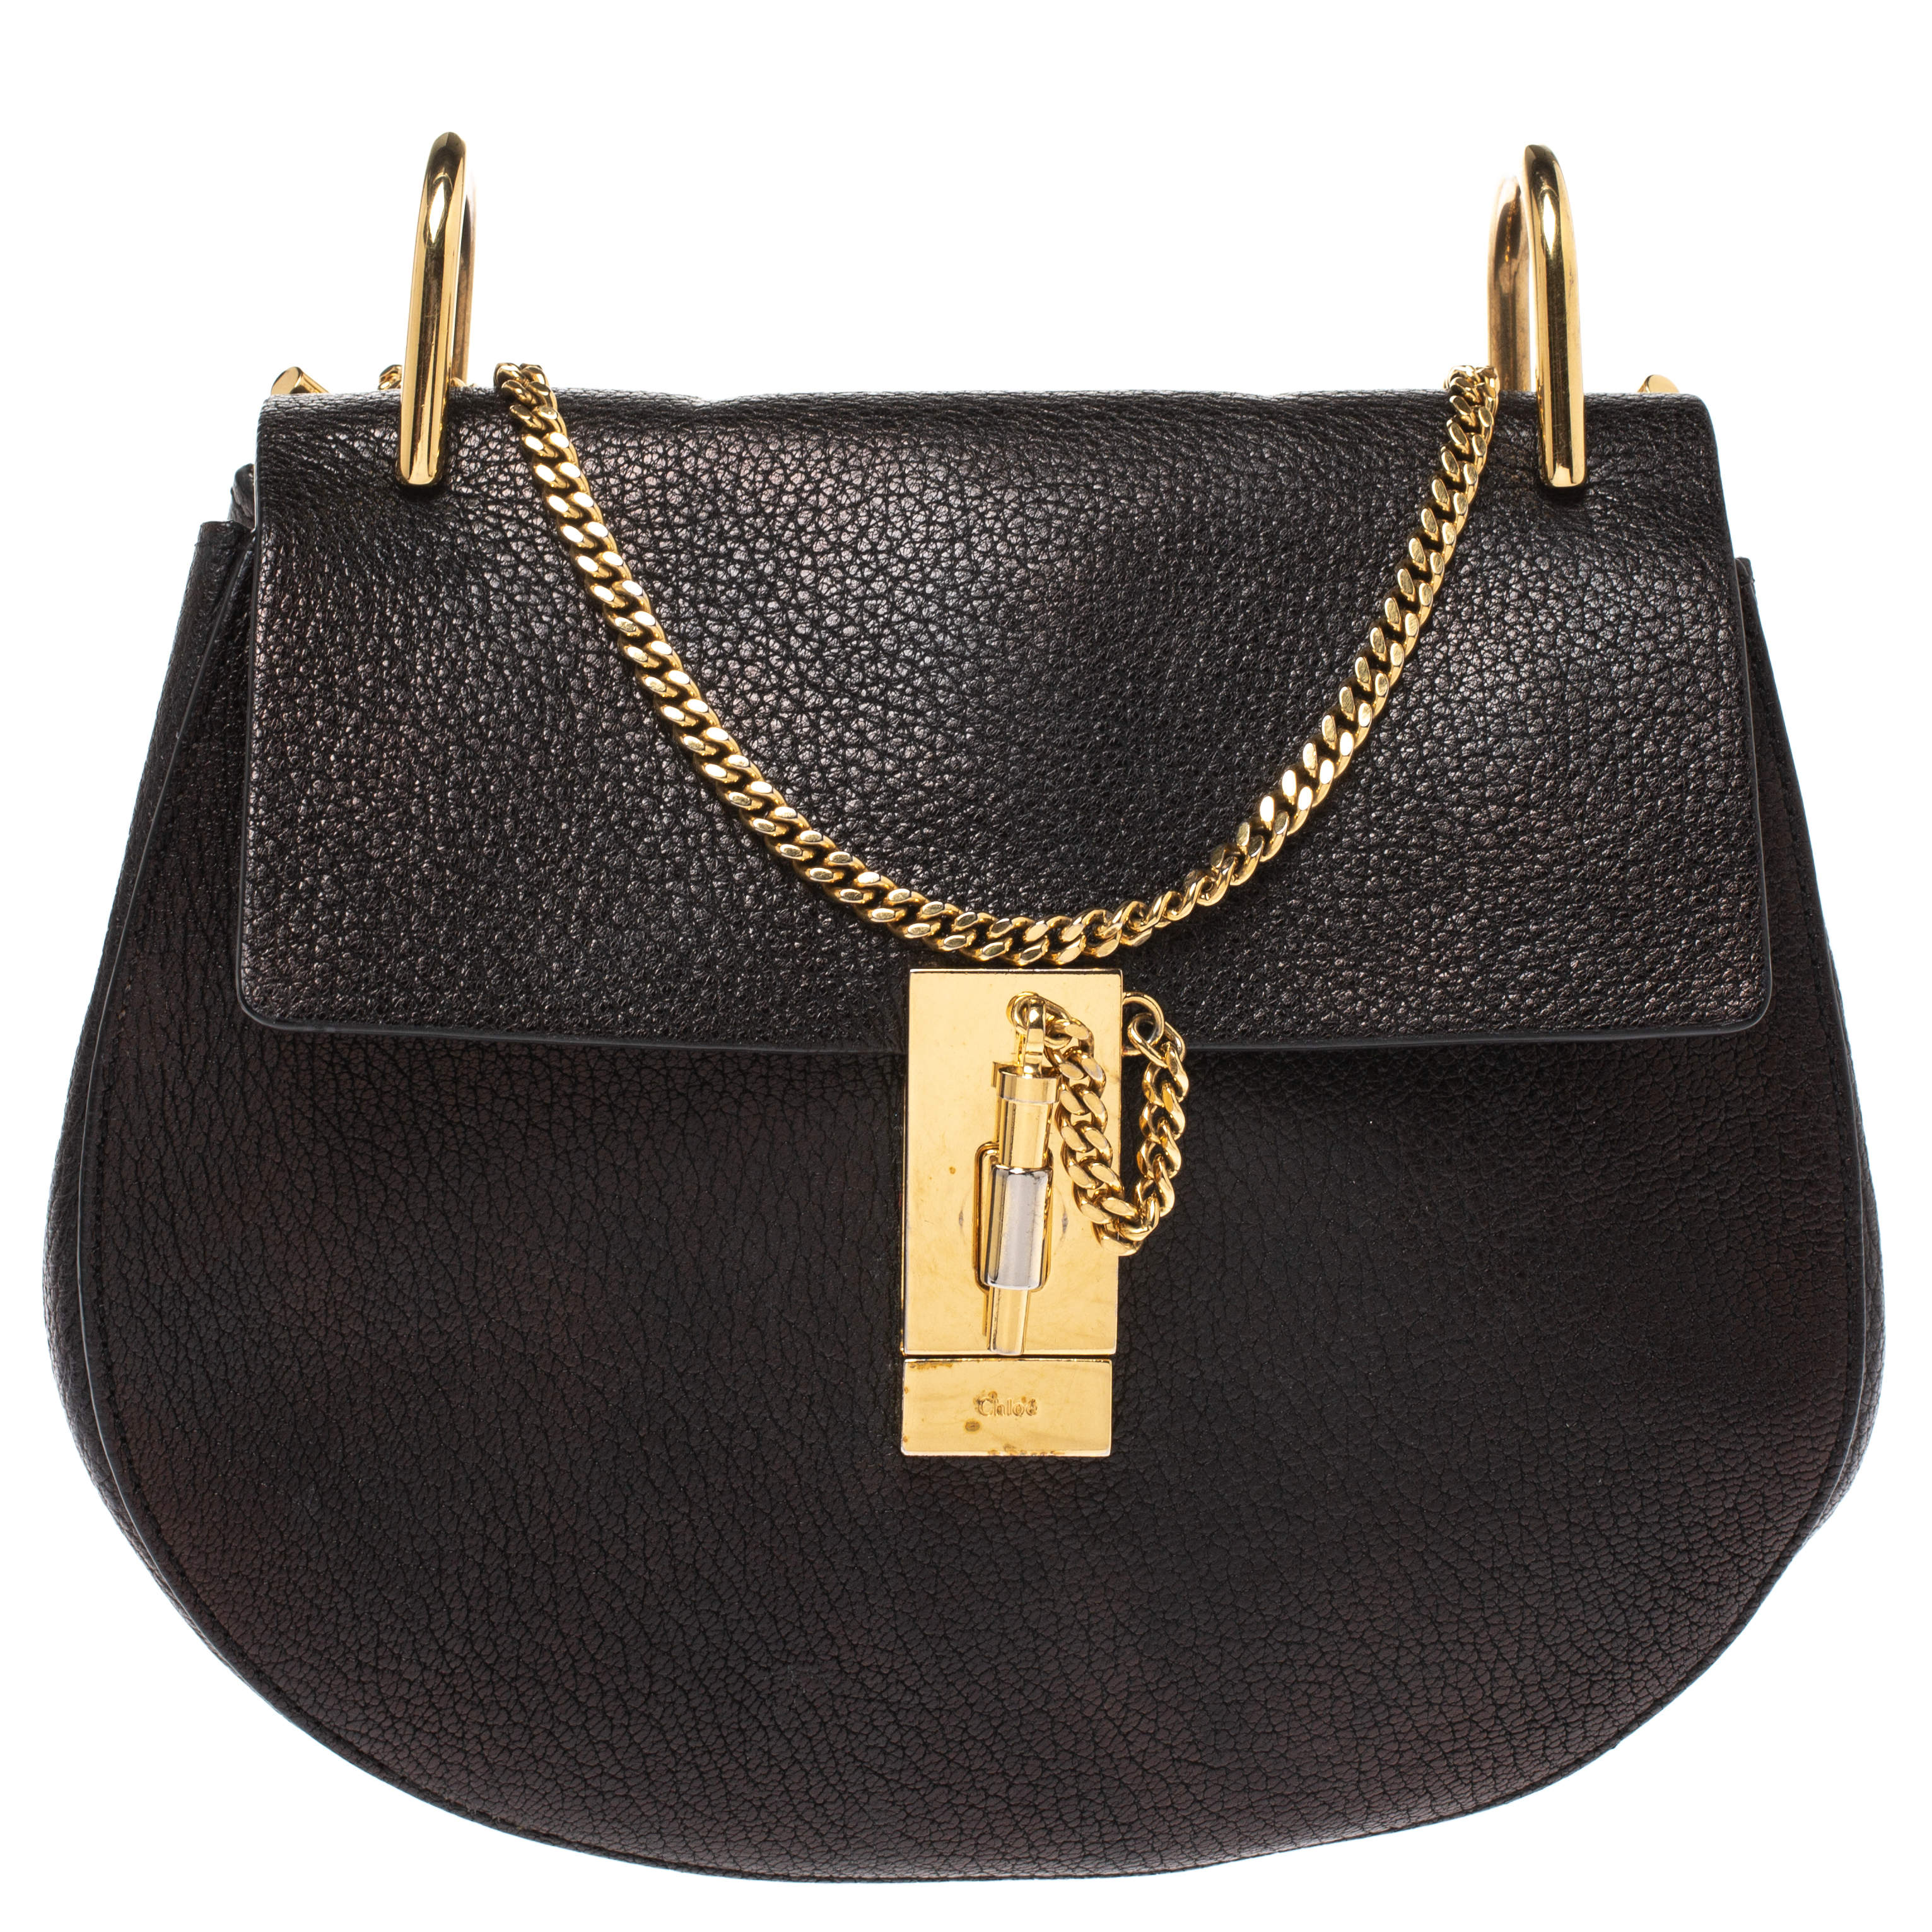 Chloe Black Leather Medium Drew Shoulder Bag Chloe | The Luxury Closet